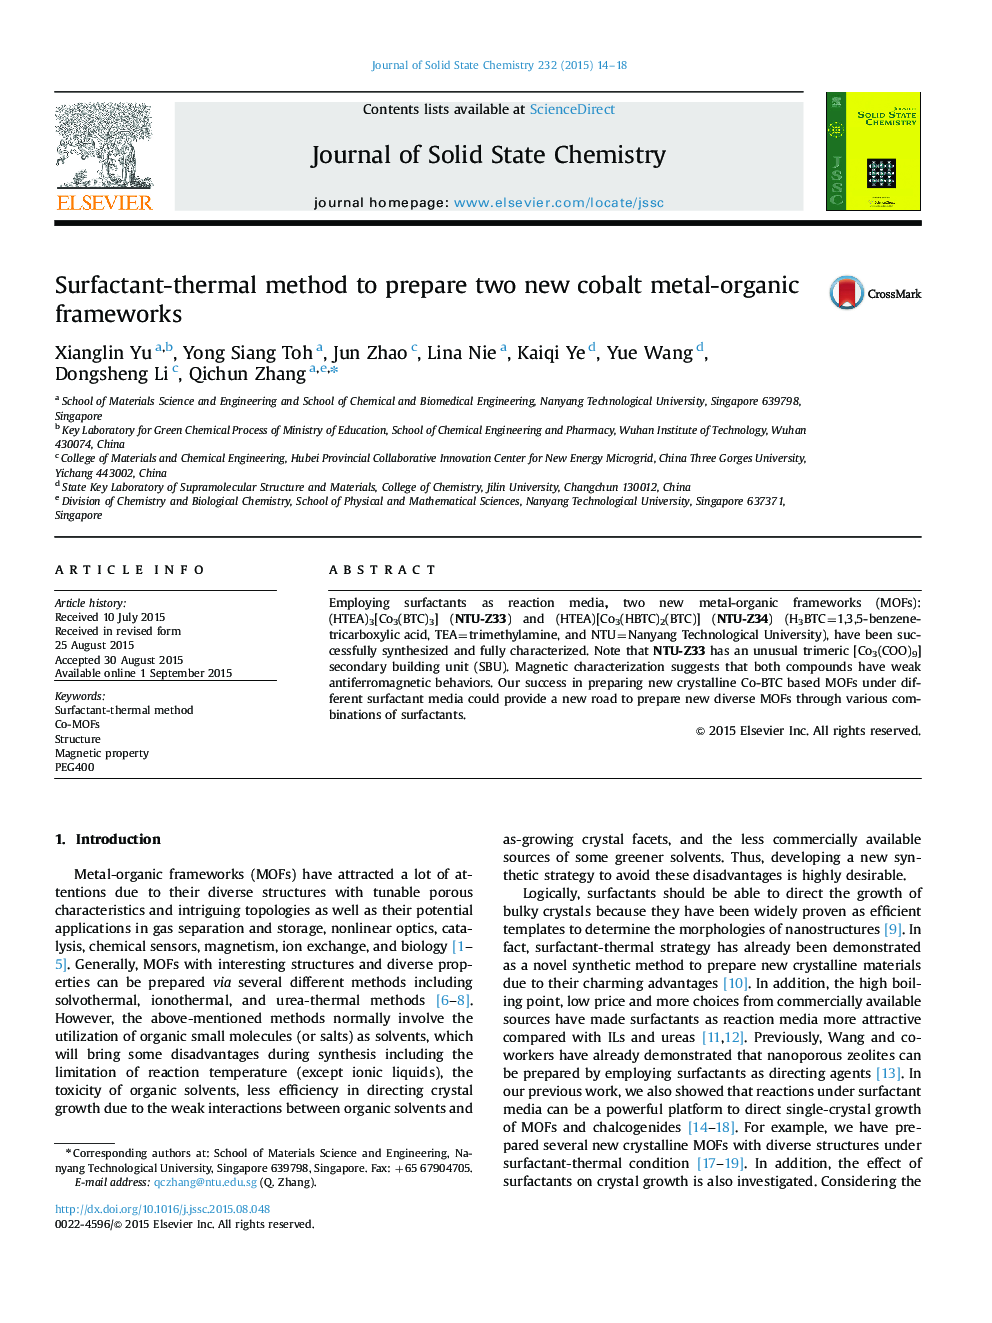 Surfactant-thermal method to prepare two new cobalt metal-organic frameworks